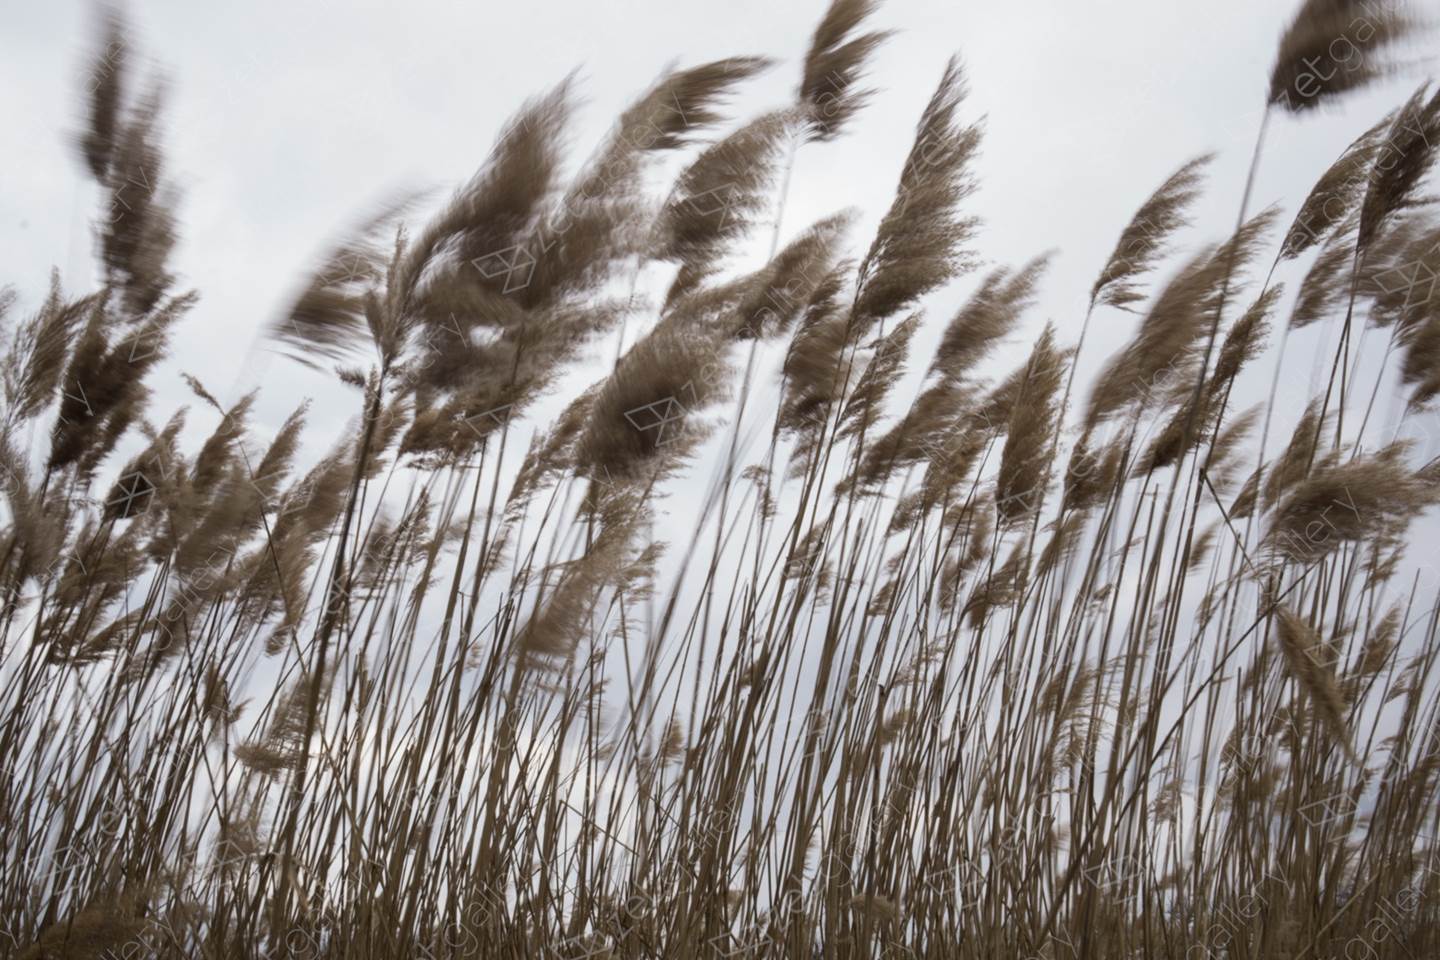 Landscape with reeds #3, original Naturaleza muerta Digital Fotografía de Liliia Kucher